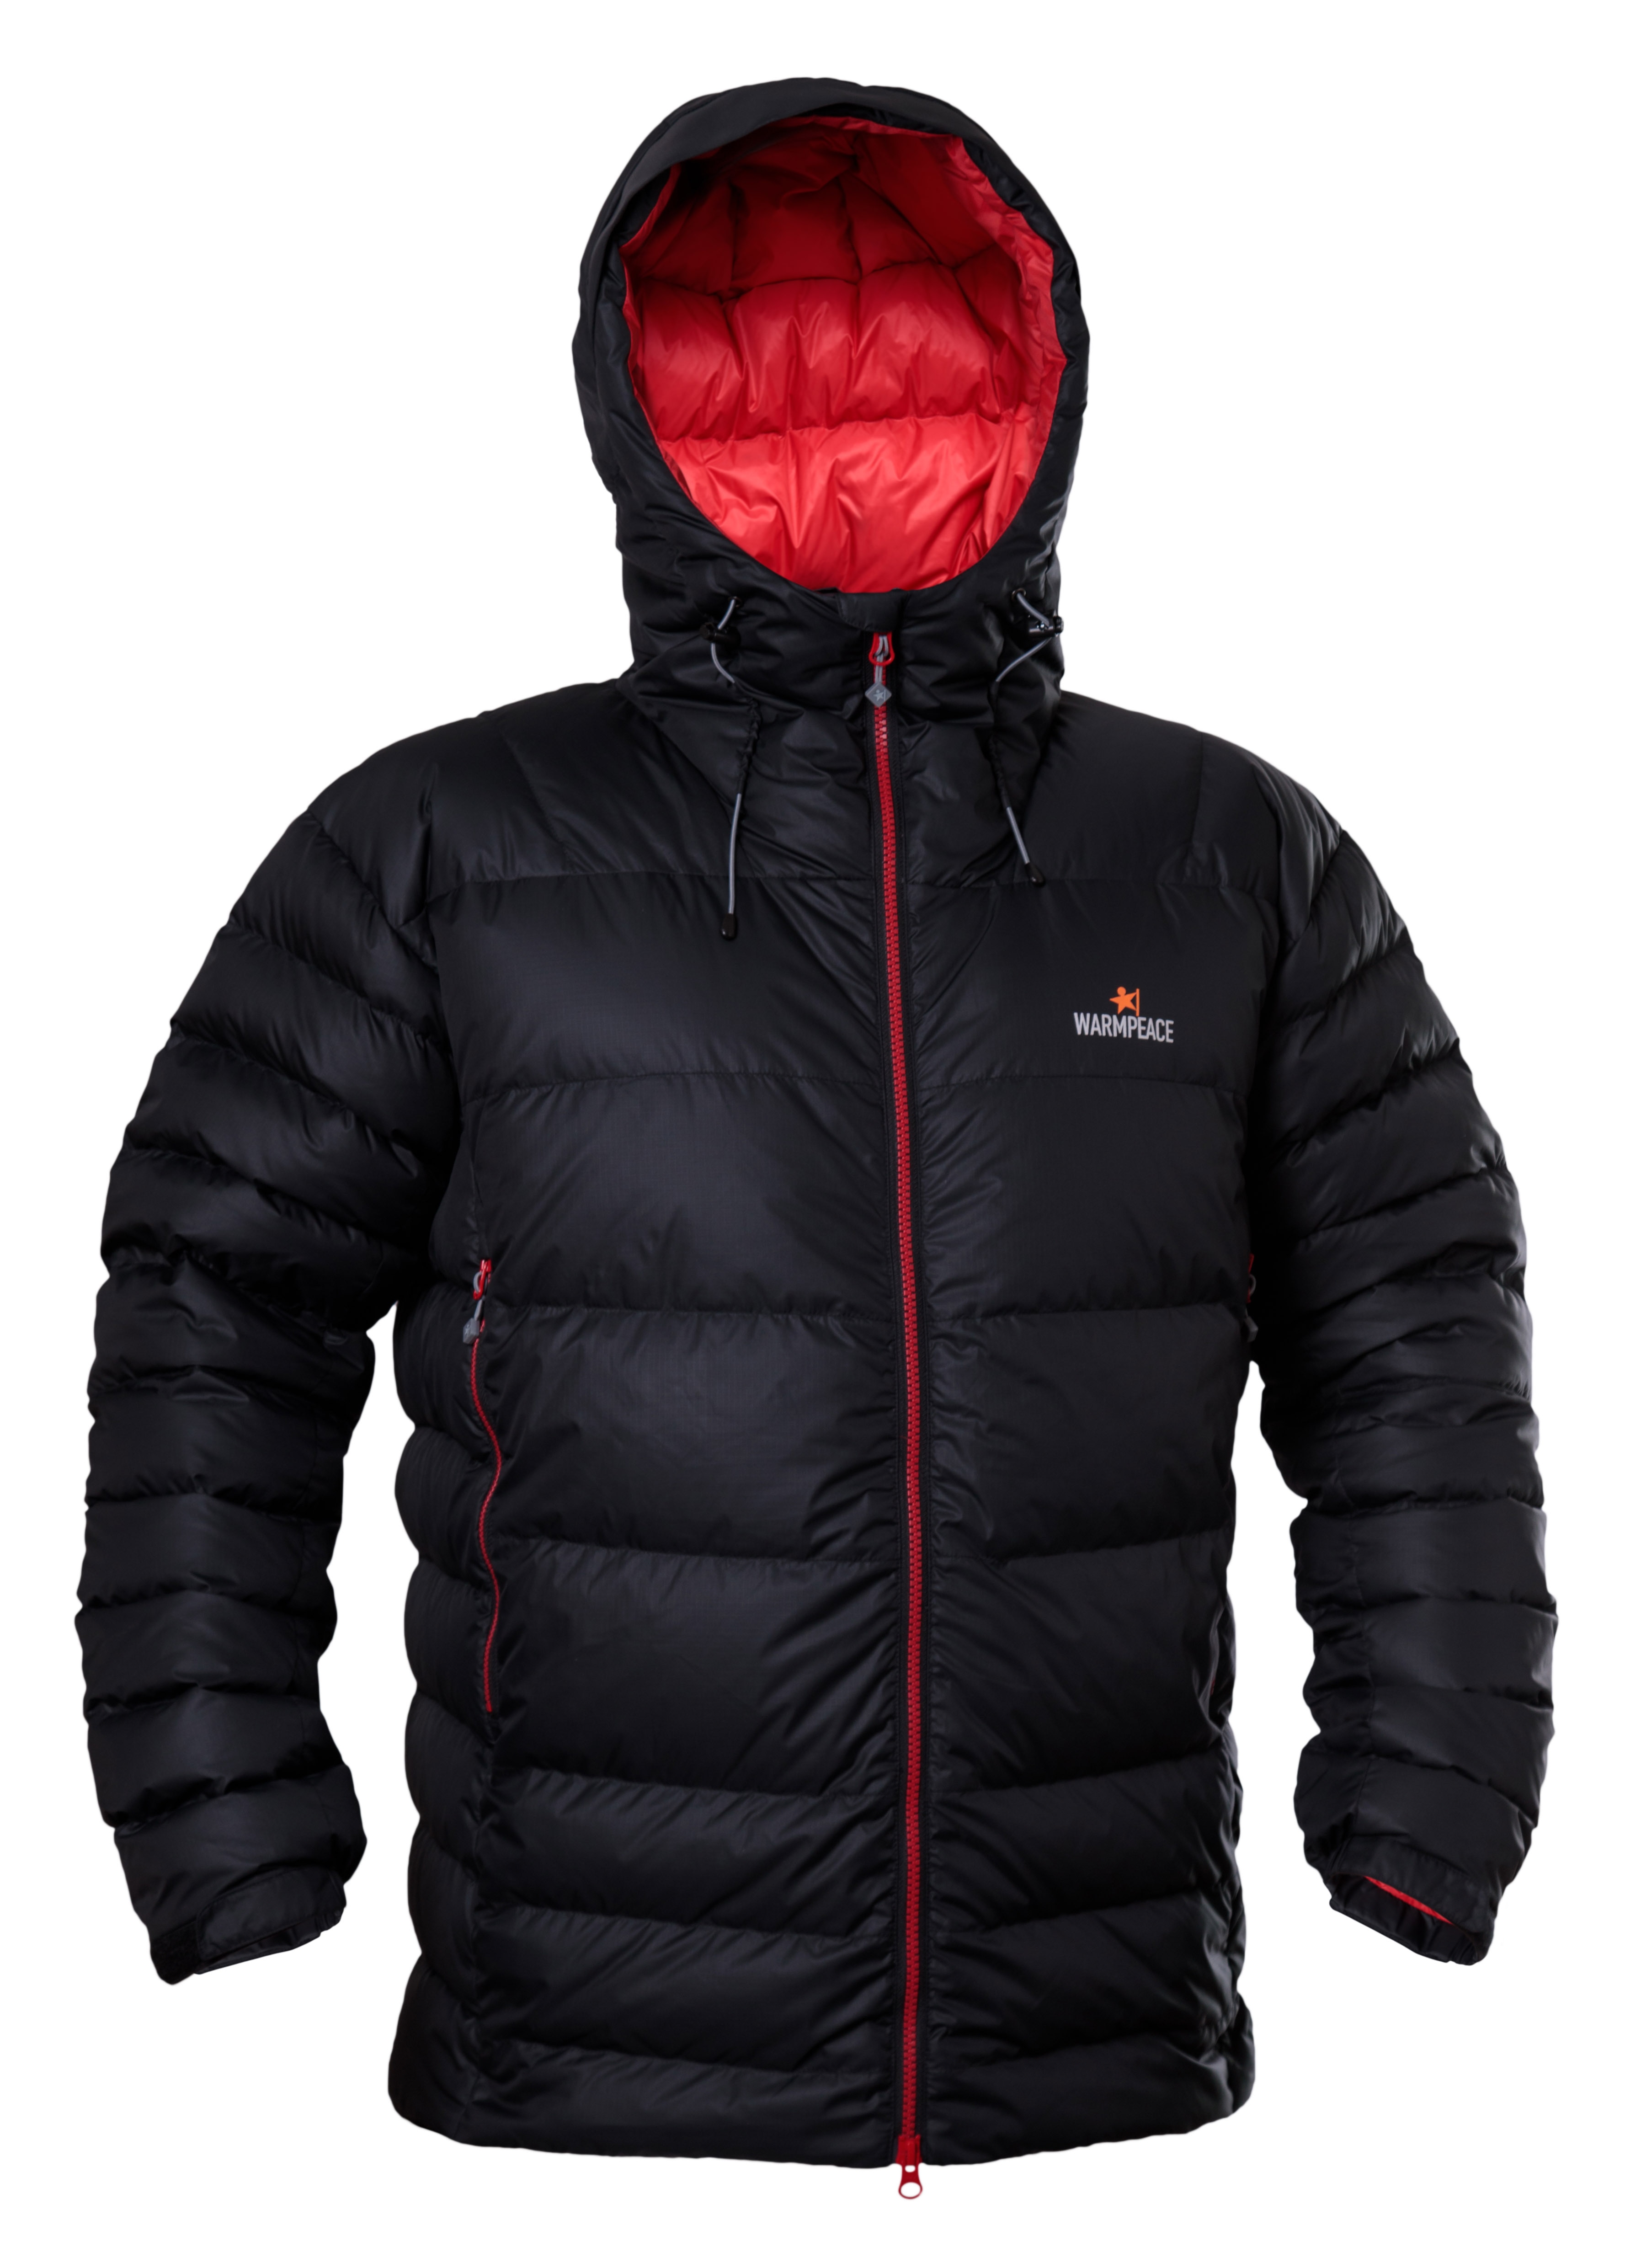 4377 Alaskan jacket black-mars red